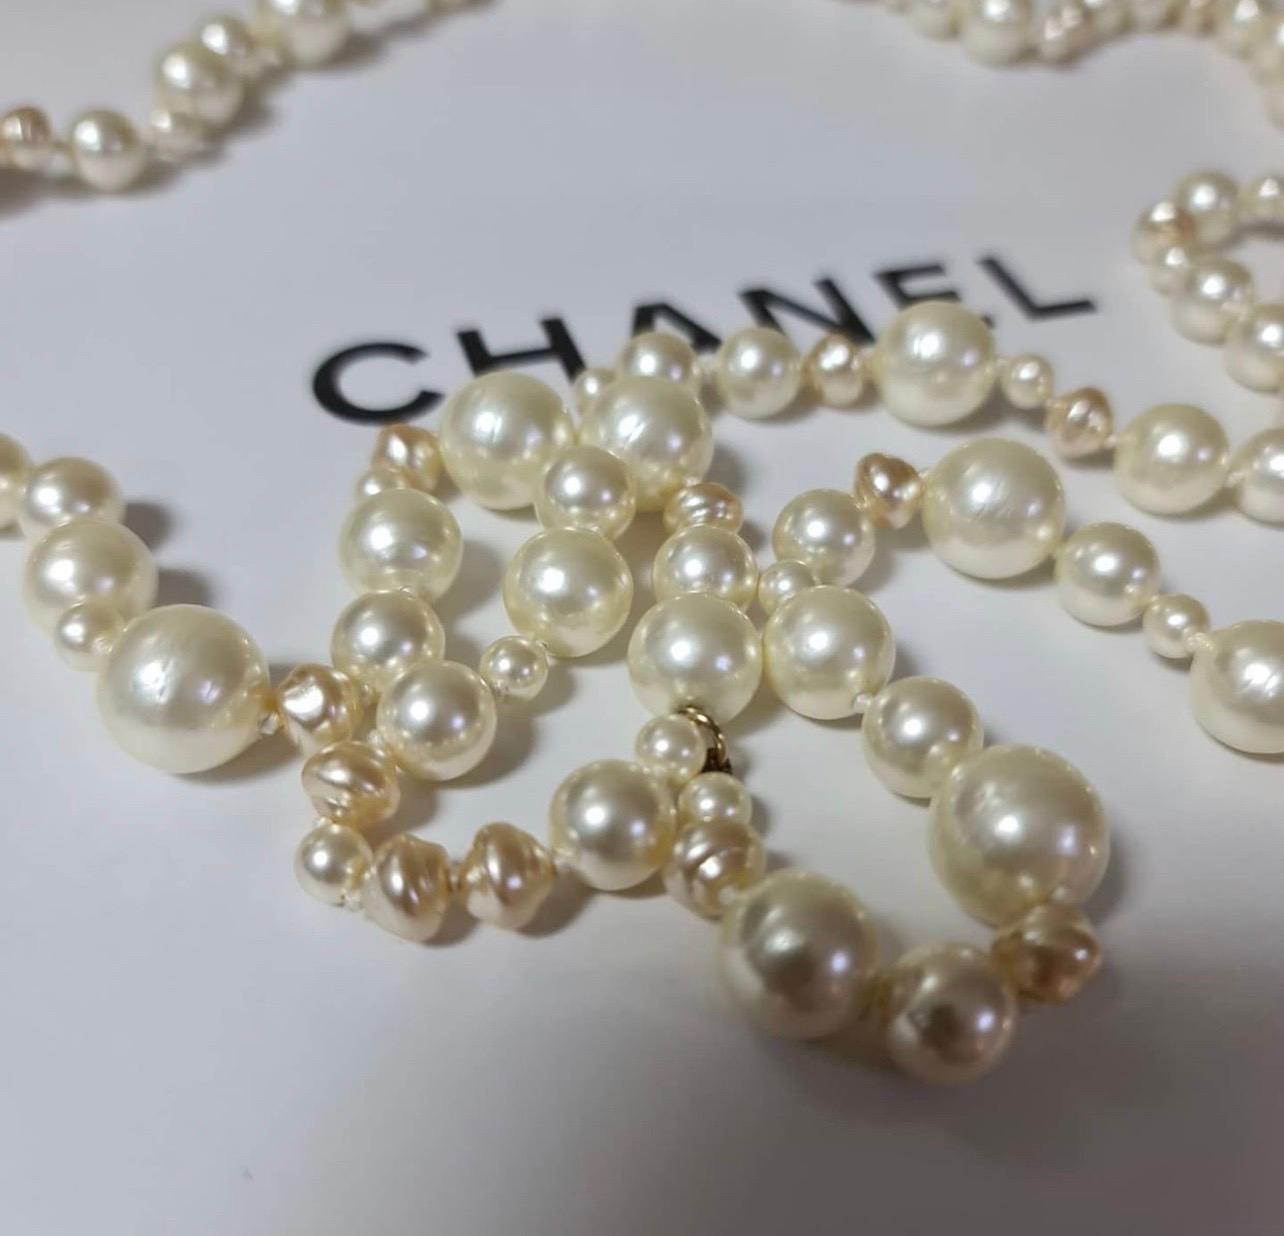 Chanel Chanel 10a Faux Pearl Cc Logo Belt Necklace 2